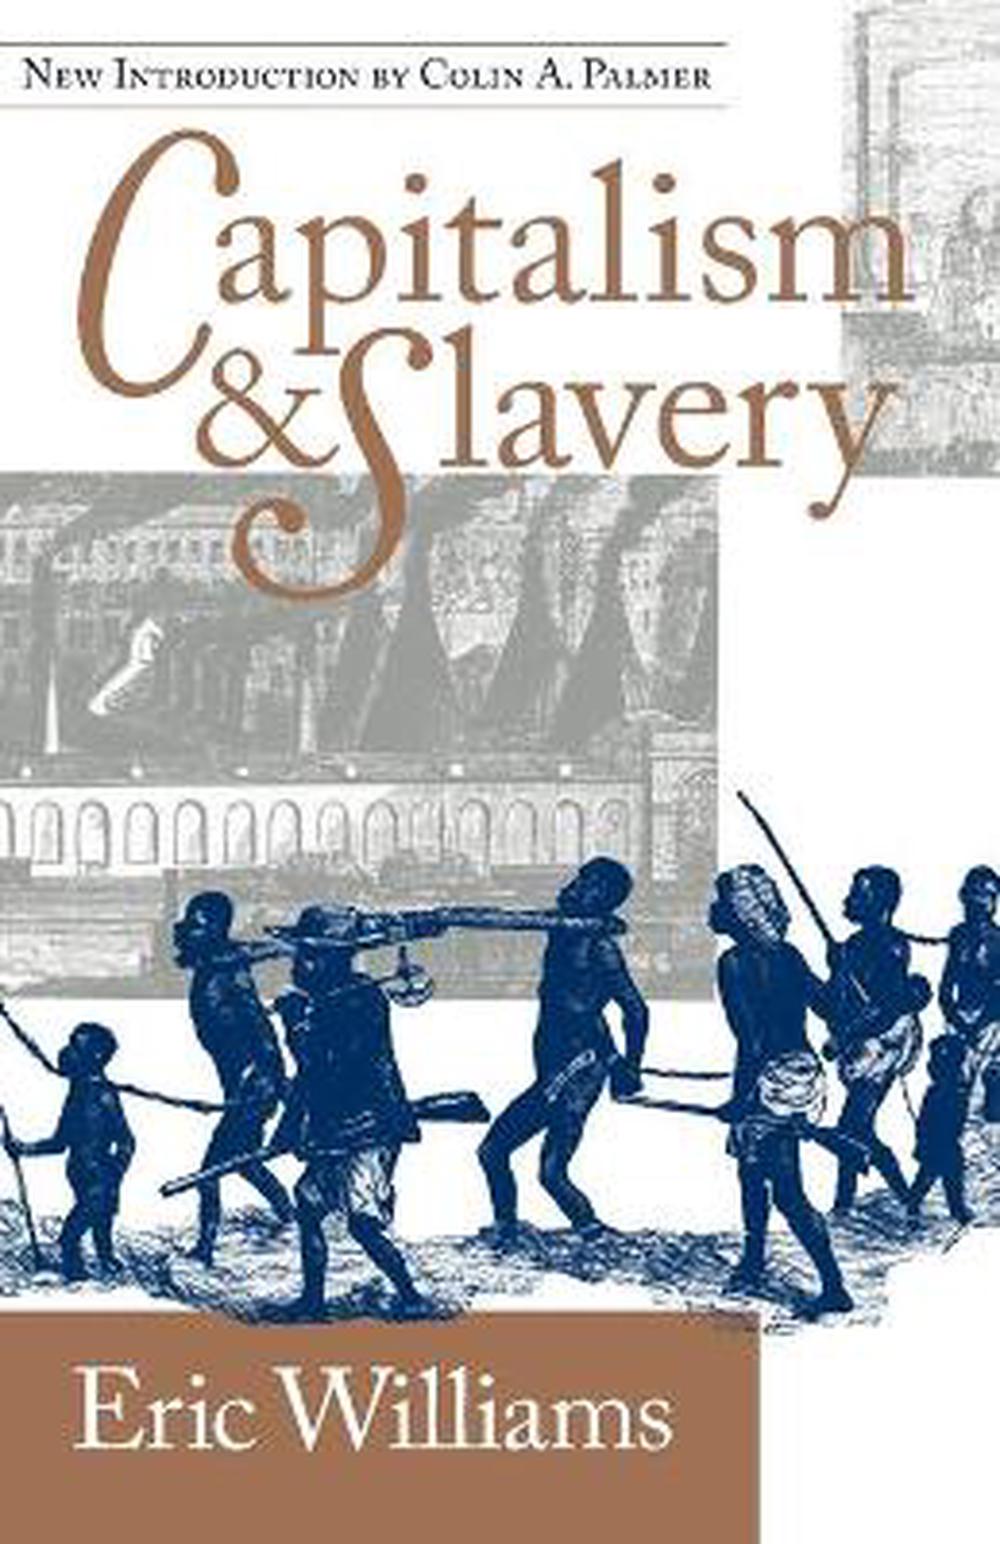 slavery and capitalism essay